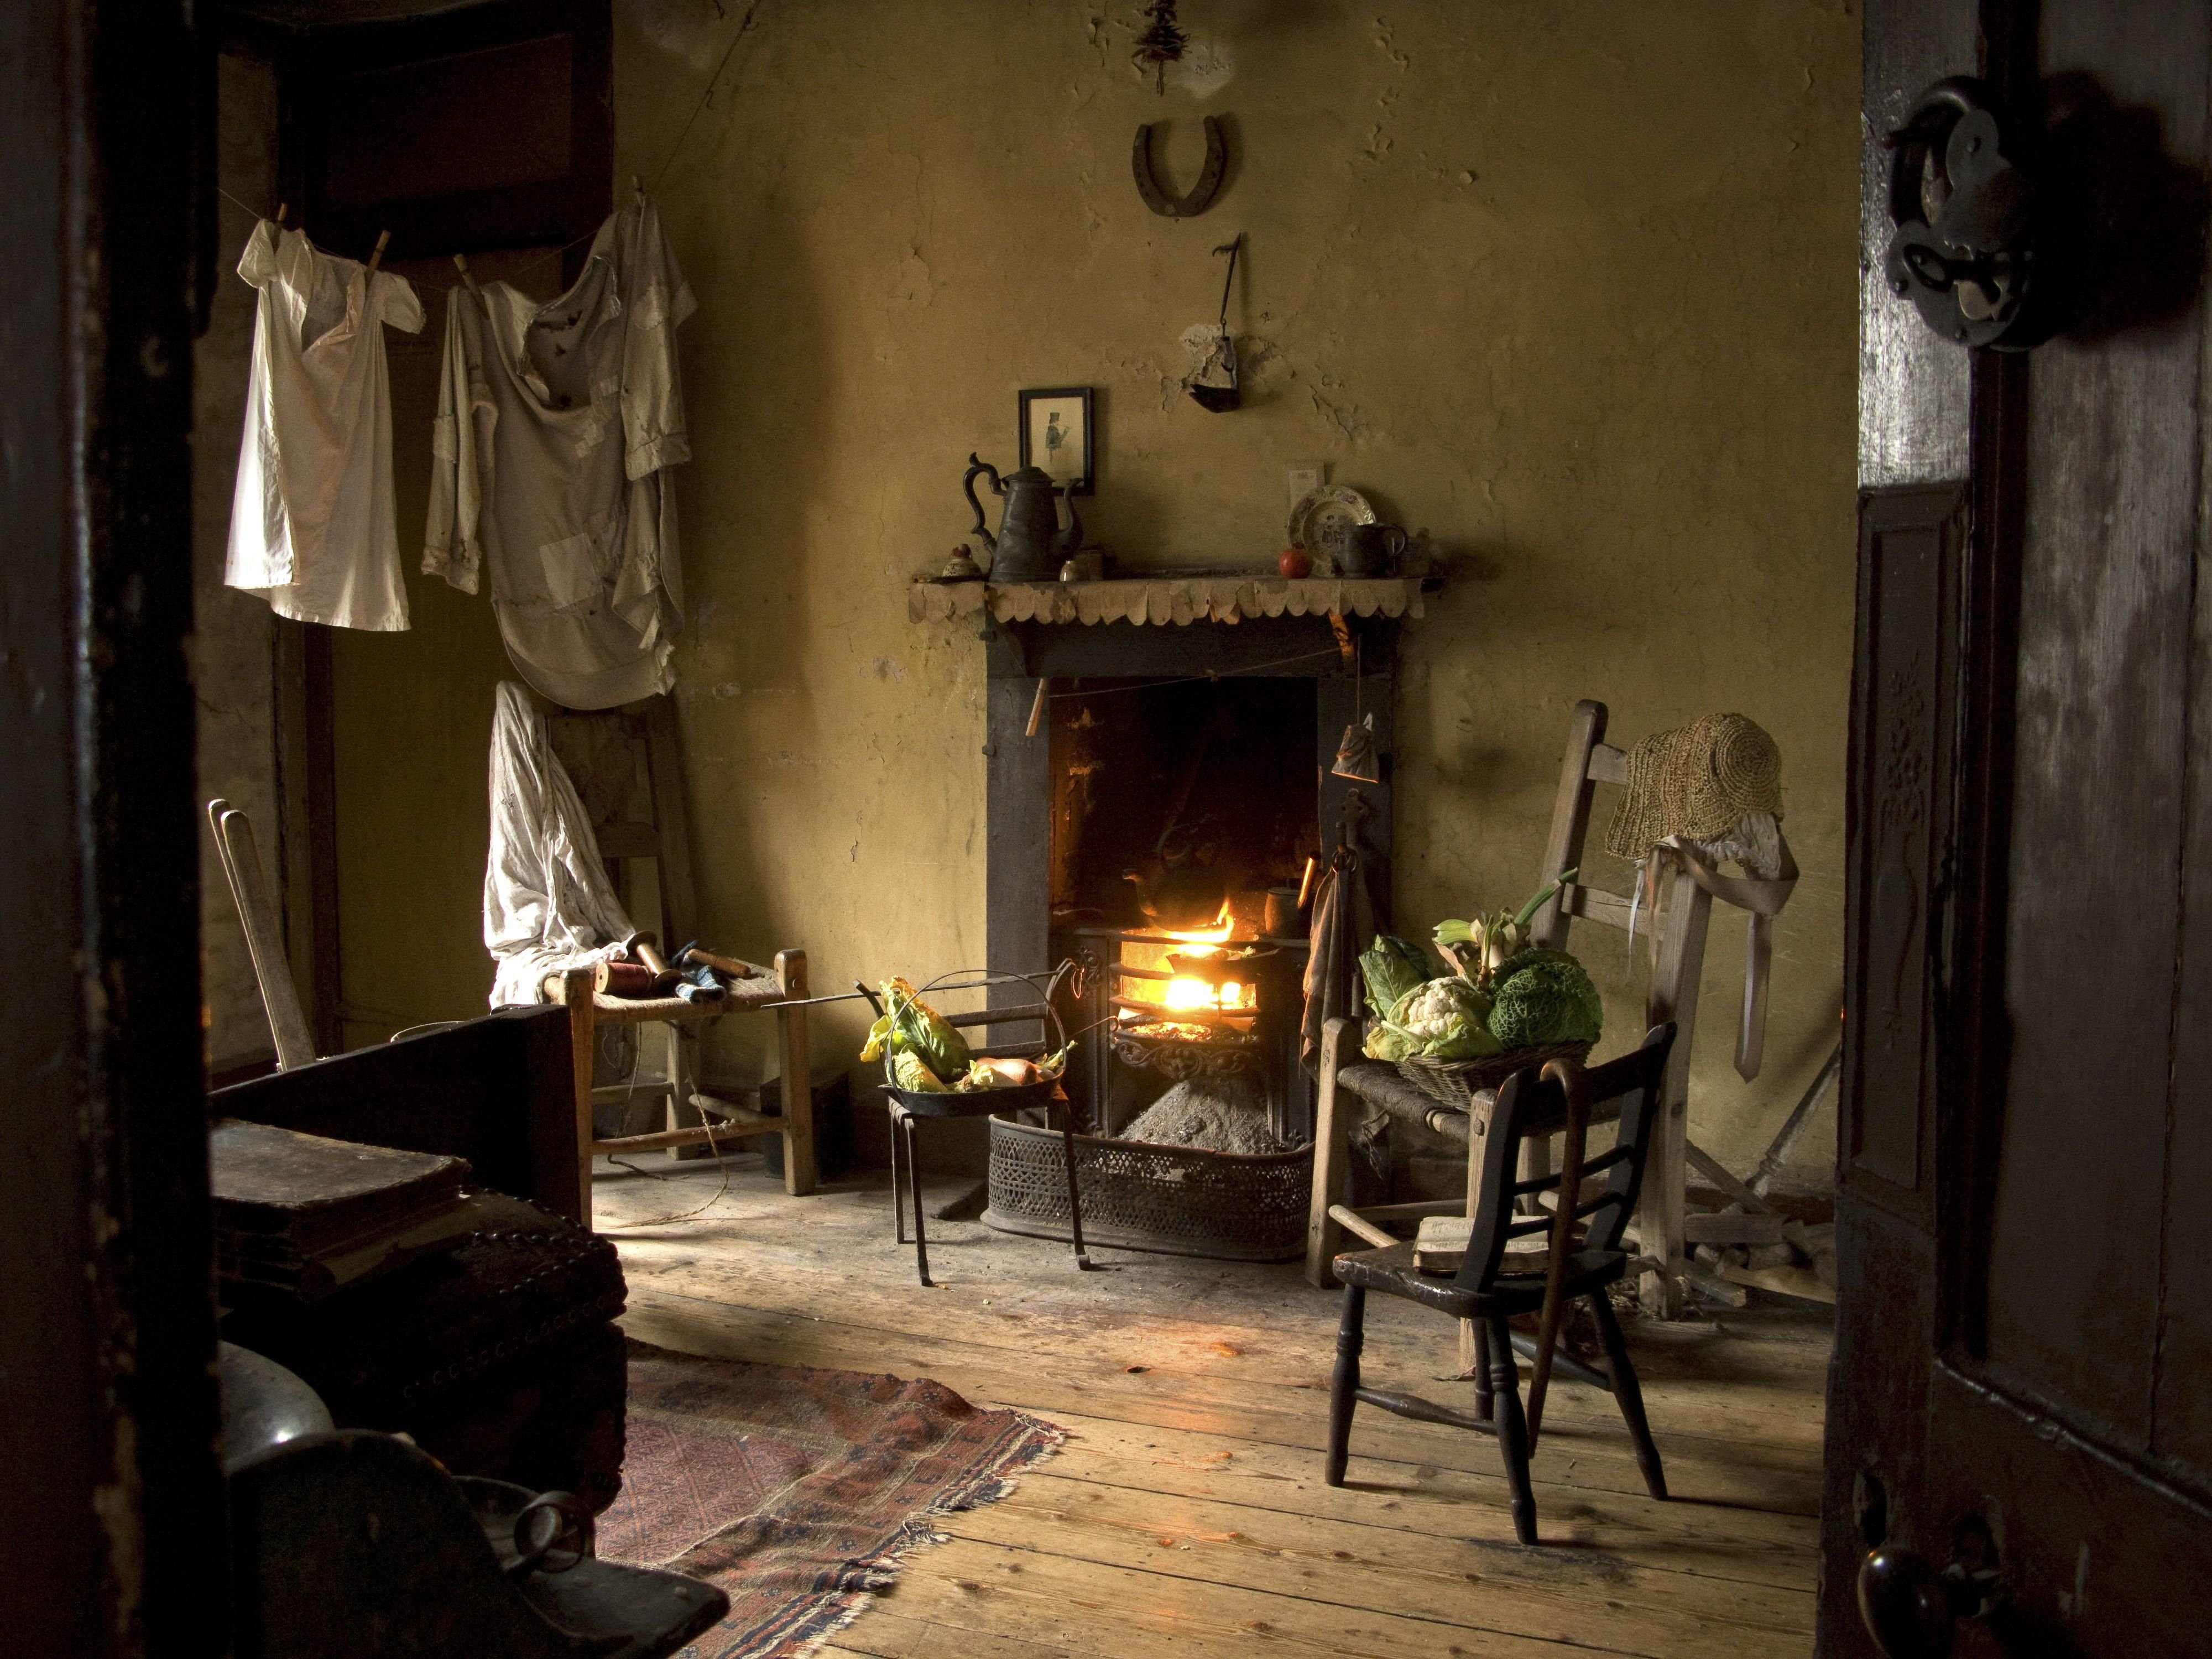 Каморка или коморка как правильно. Убранство 19 века дом бедный. Каморка 19 век. Старинная комната. Старинный интерьер комнаты.